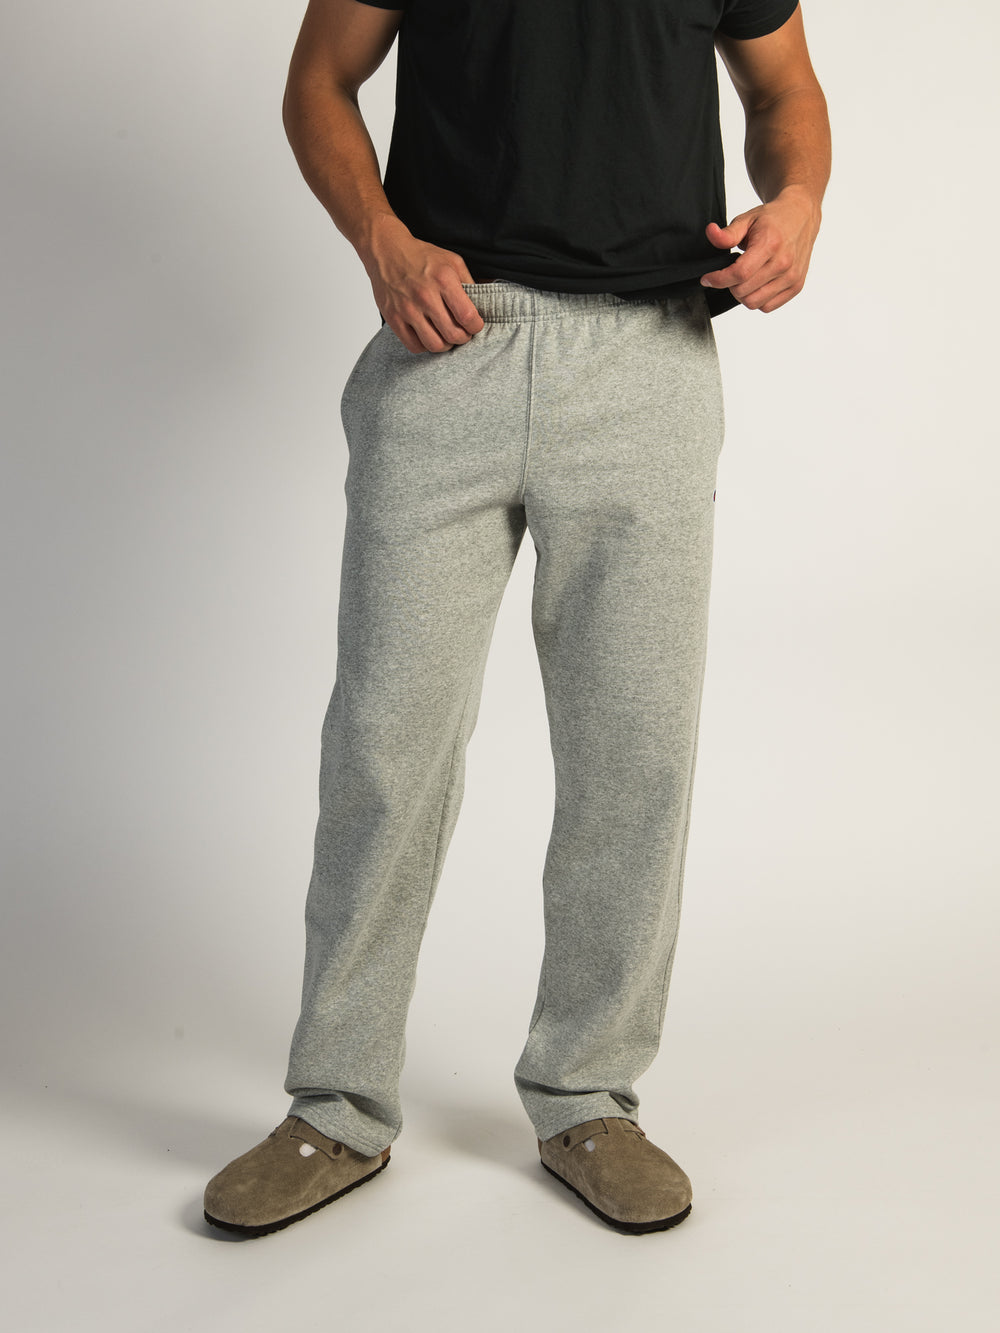 Men's Powerblend Fleece Open Bottom Sweatpants, 32